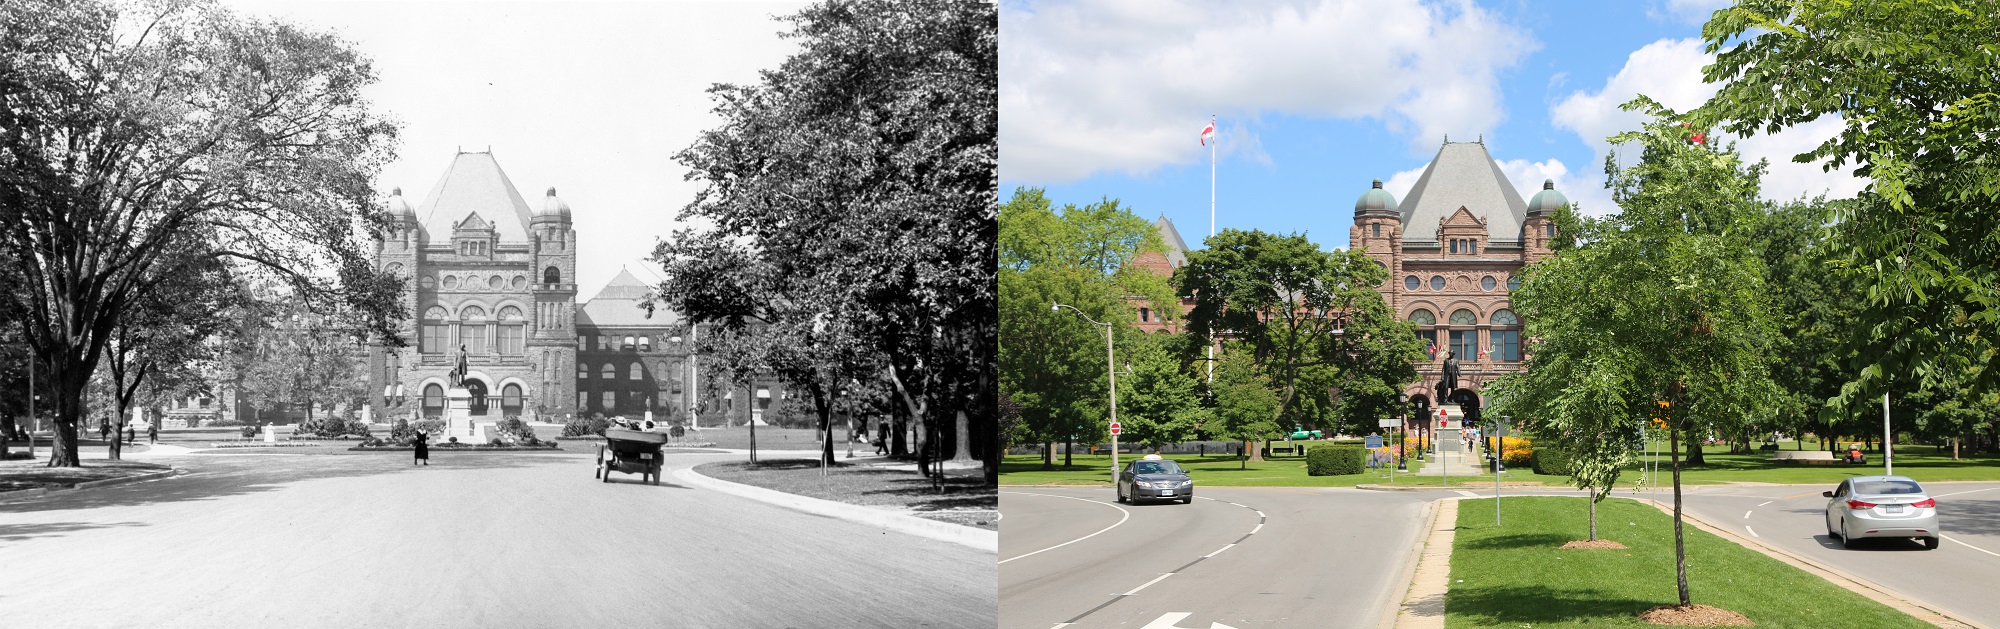 View towards Ontario's Legislative Building 1920s and 2017